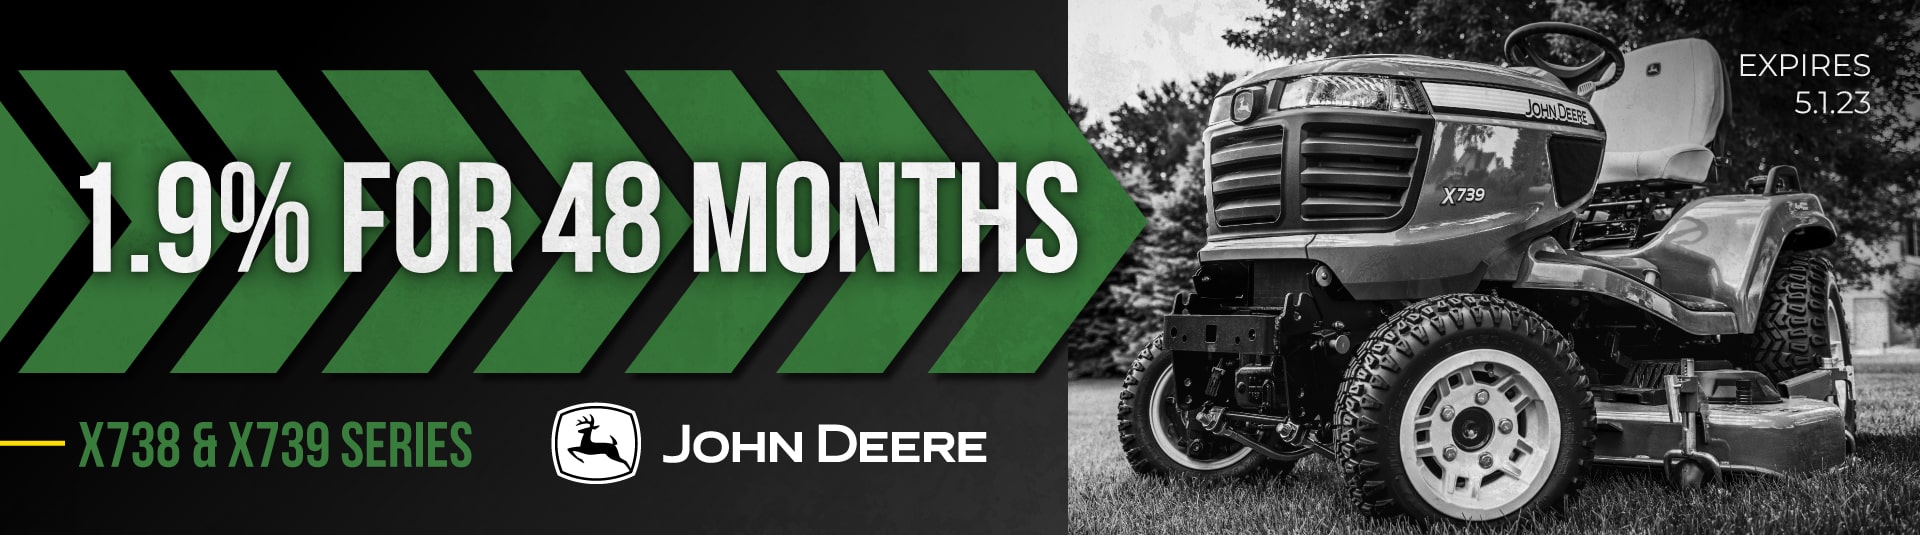 1.9% for 48 months on John Deere X738 & X739 series tractors